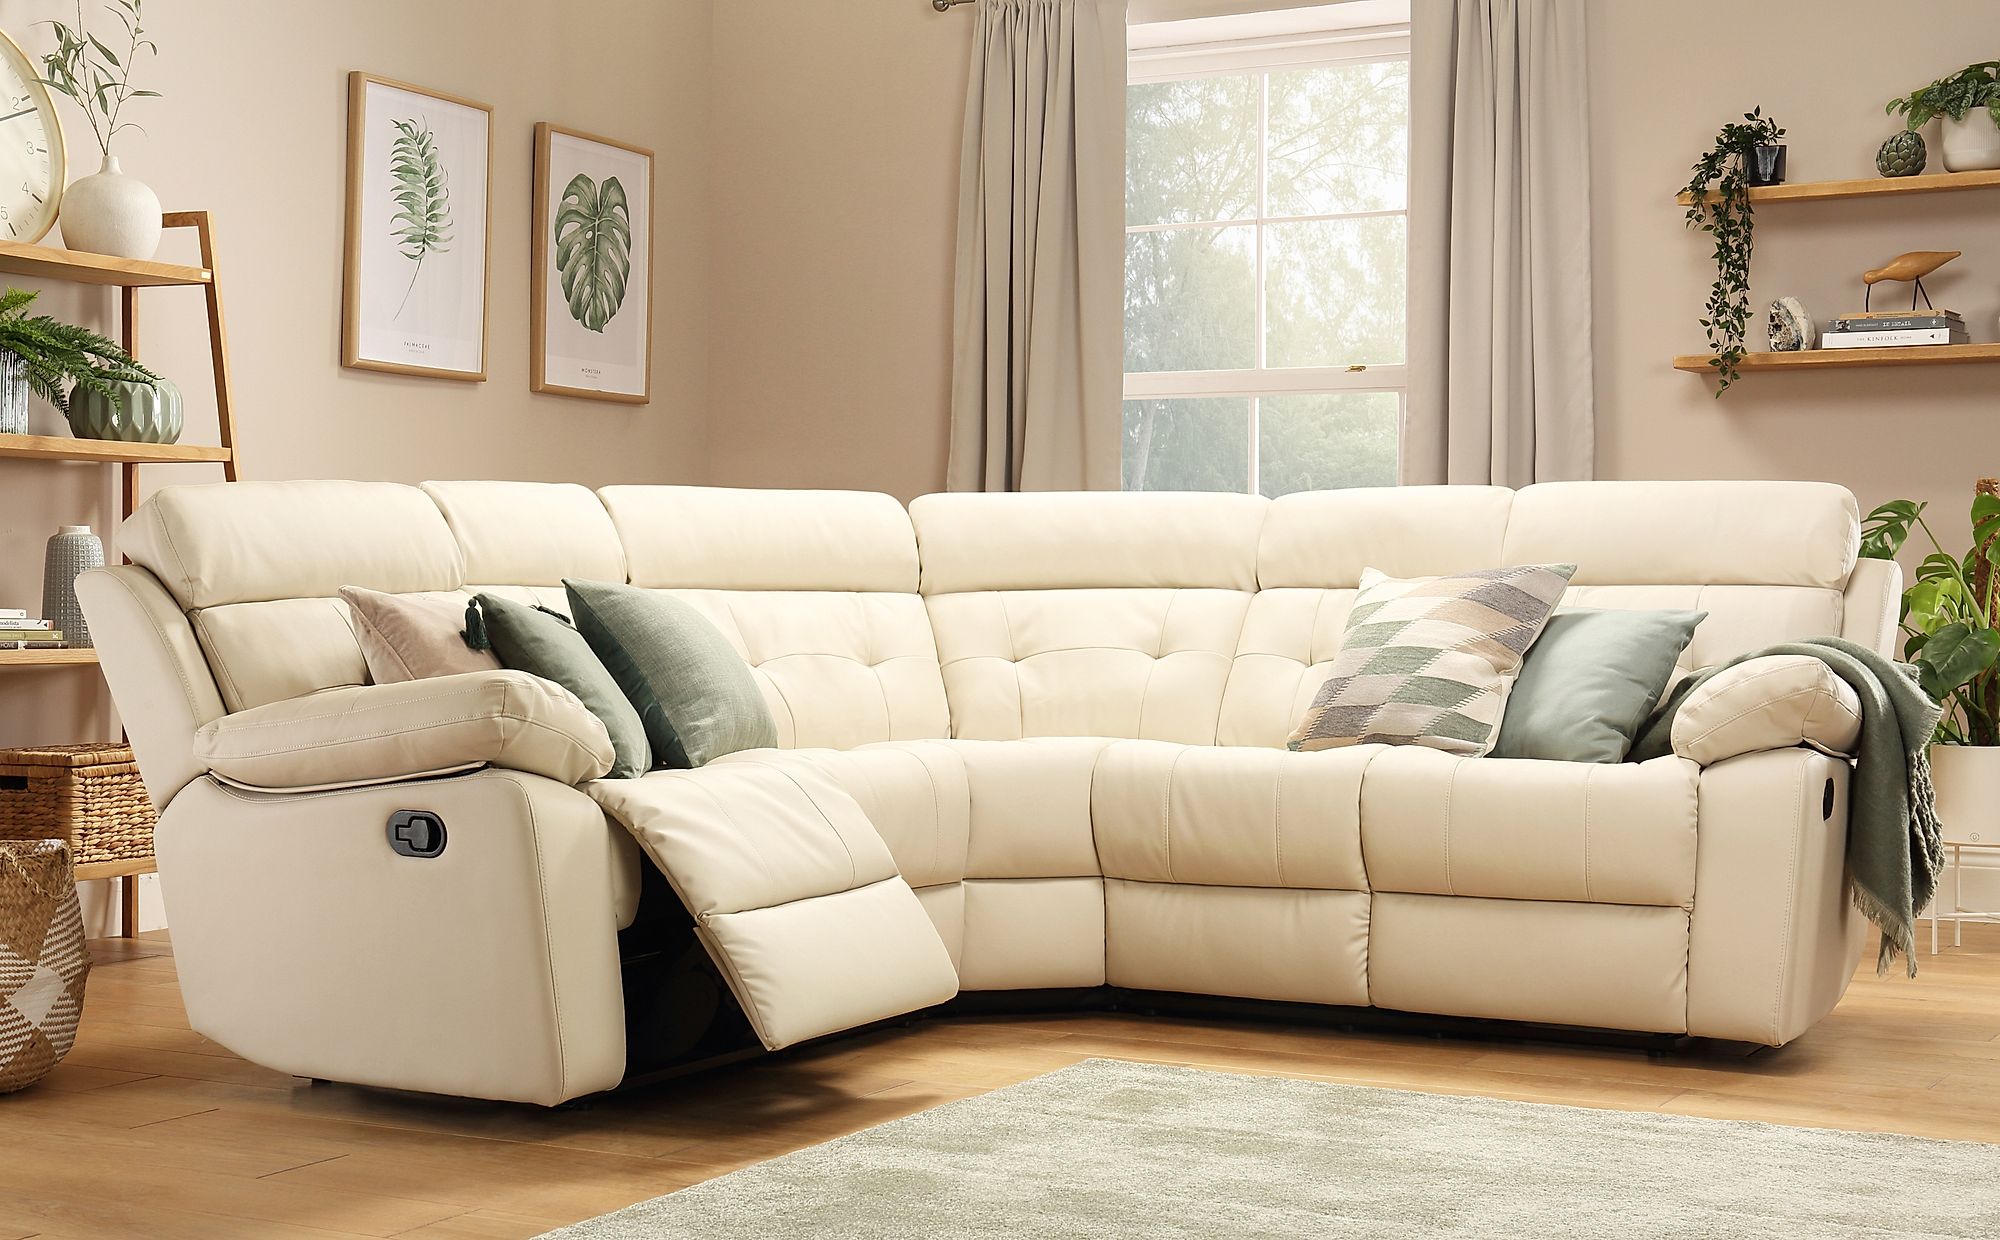 leather corner recliner sofa uk